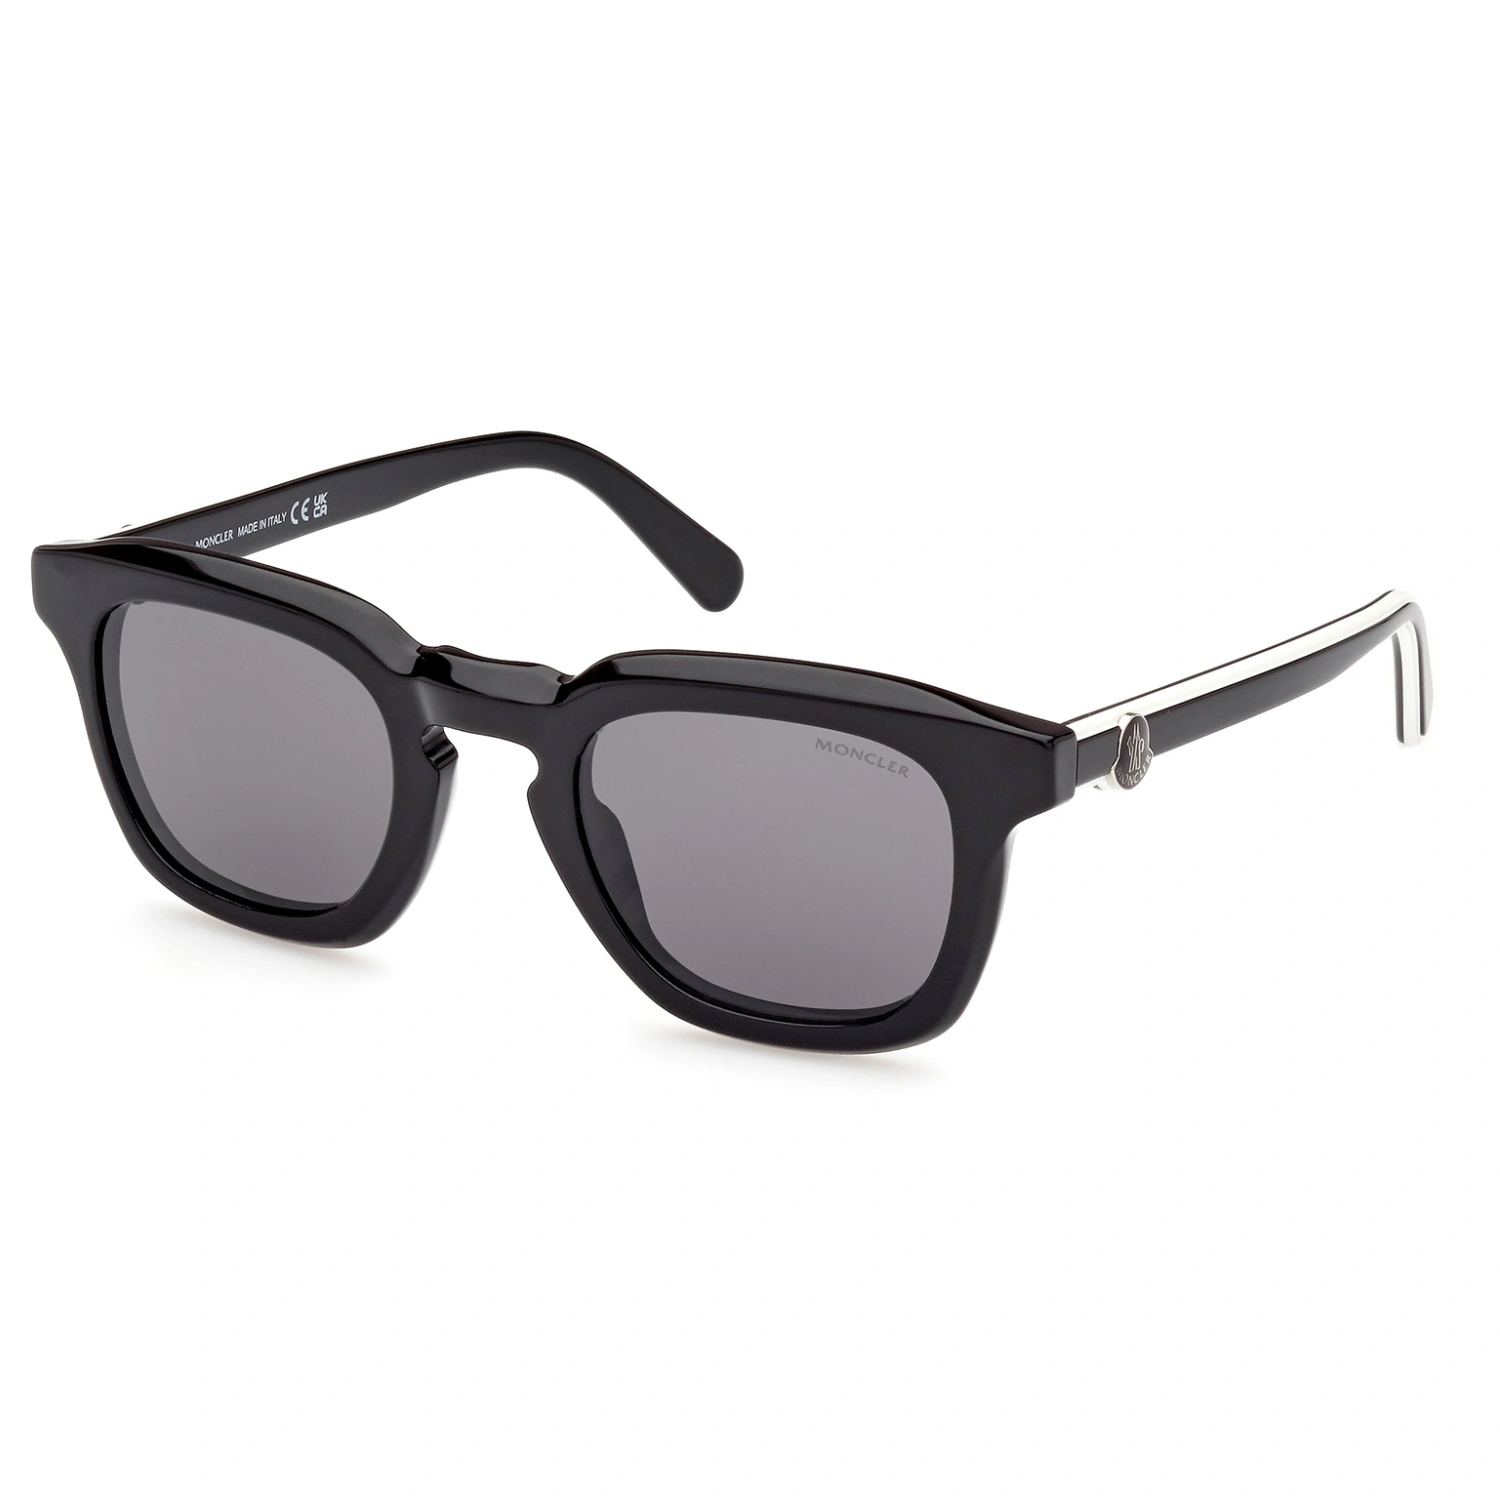 Moncler Sunglasses Moncler Sunglasses ML0262 01A 50mm Eyeglasses Eyewear UK USA Australia 